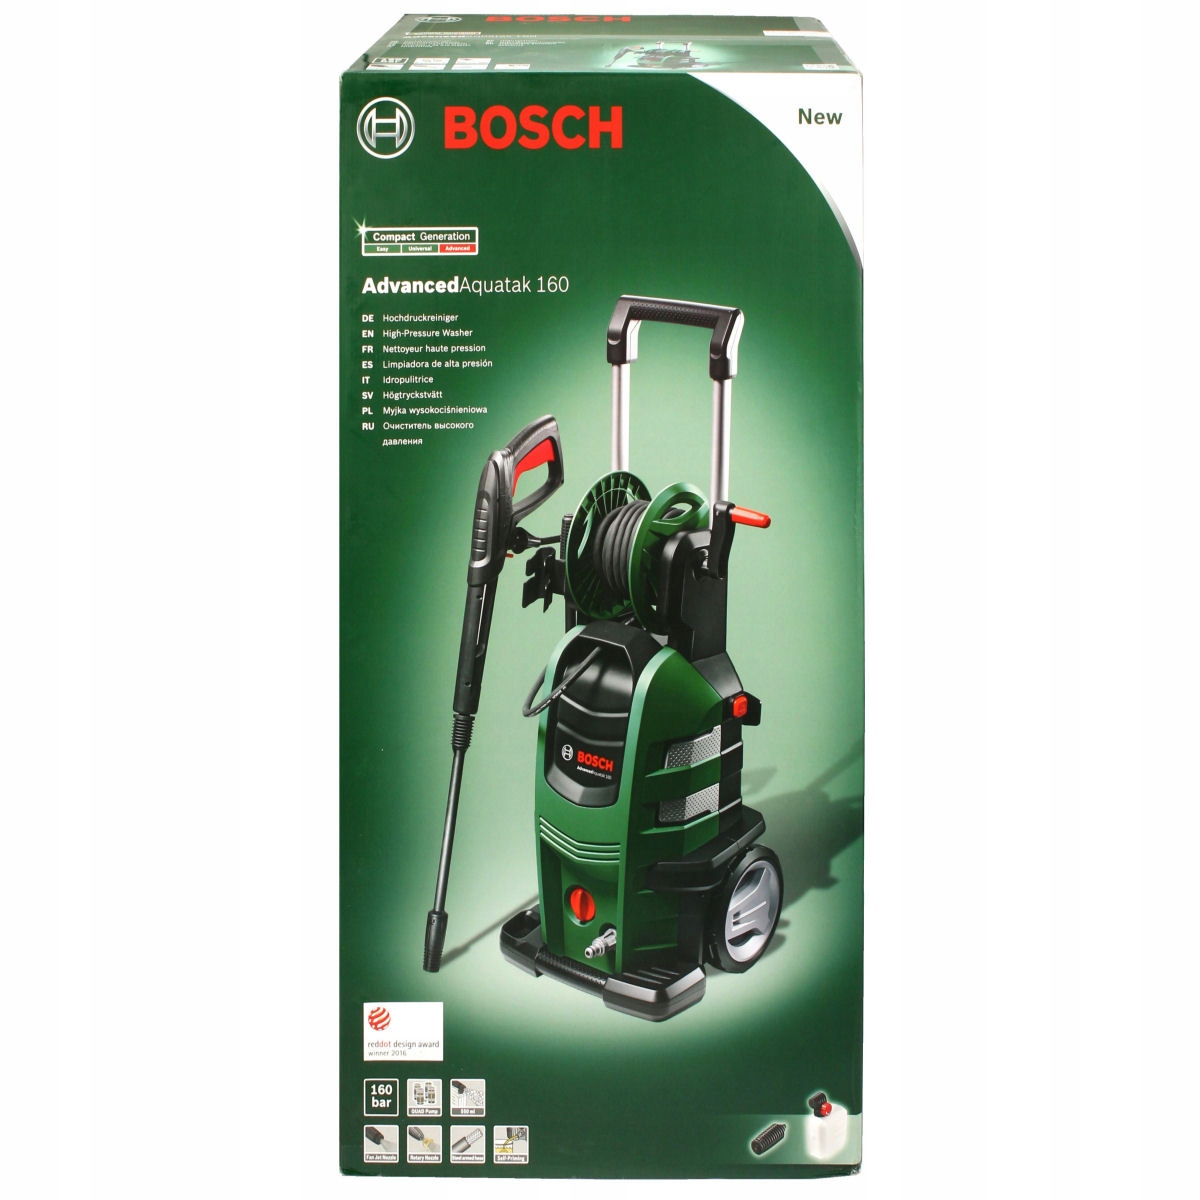 Nettoyeur haute pression Bosch AdvancedAquatak 160 - 2600W - 160bar